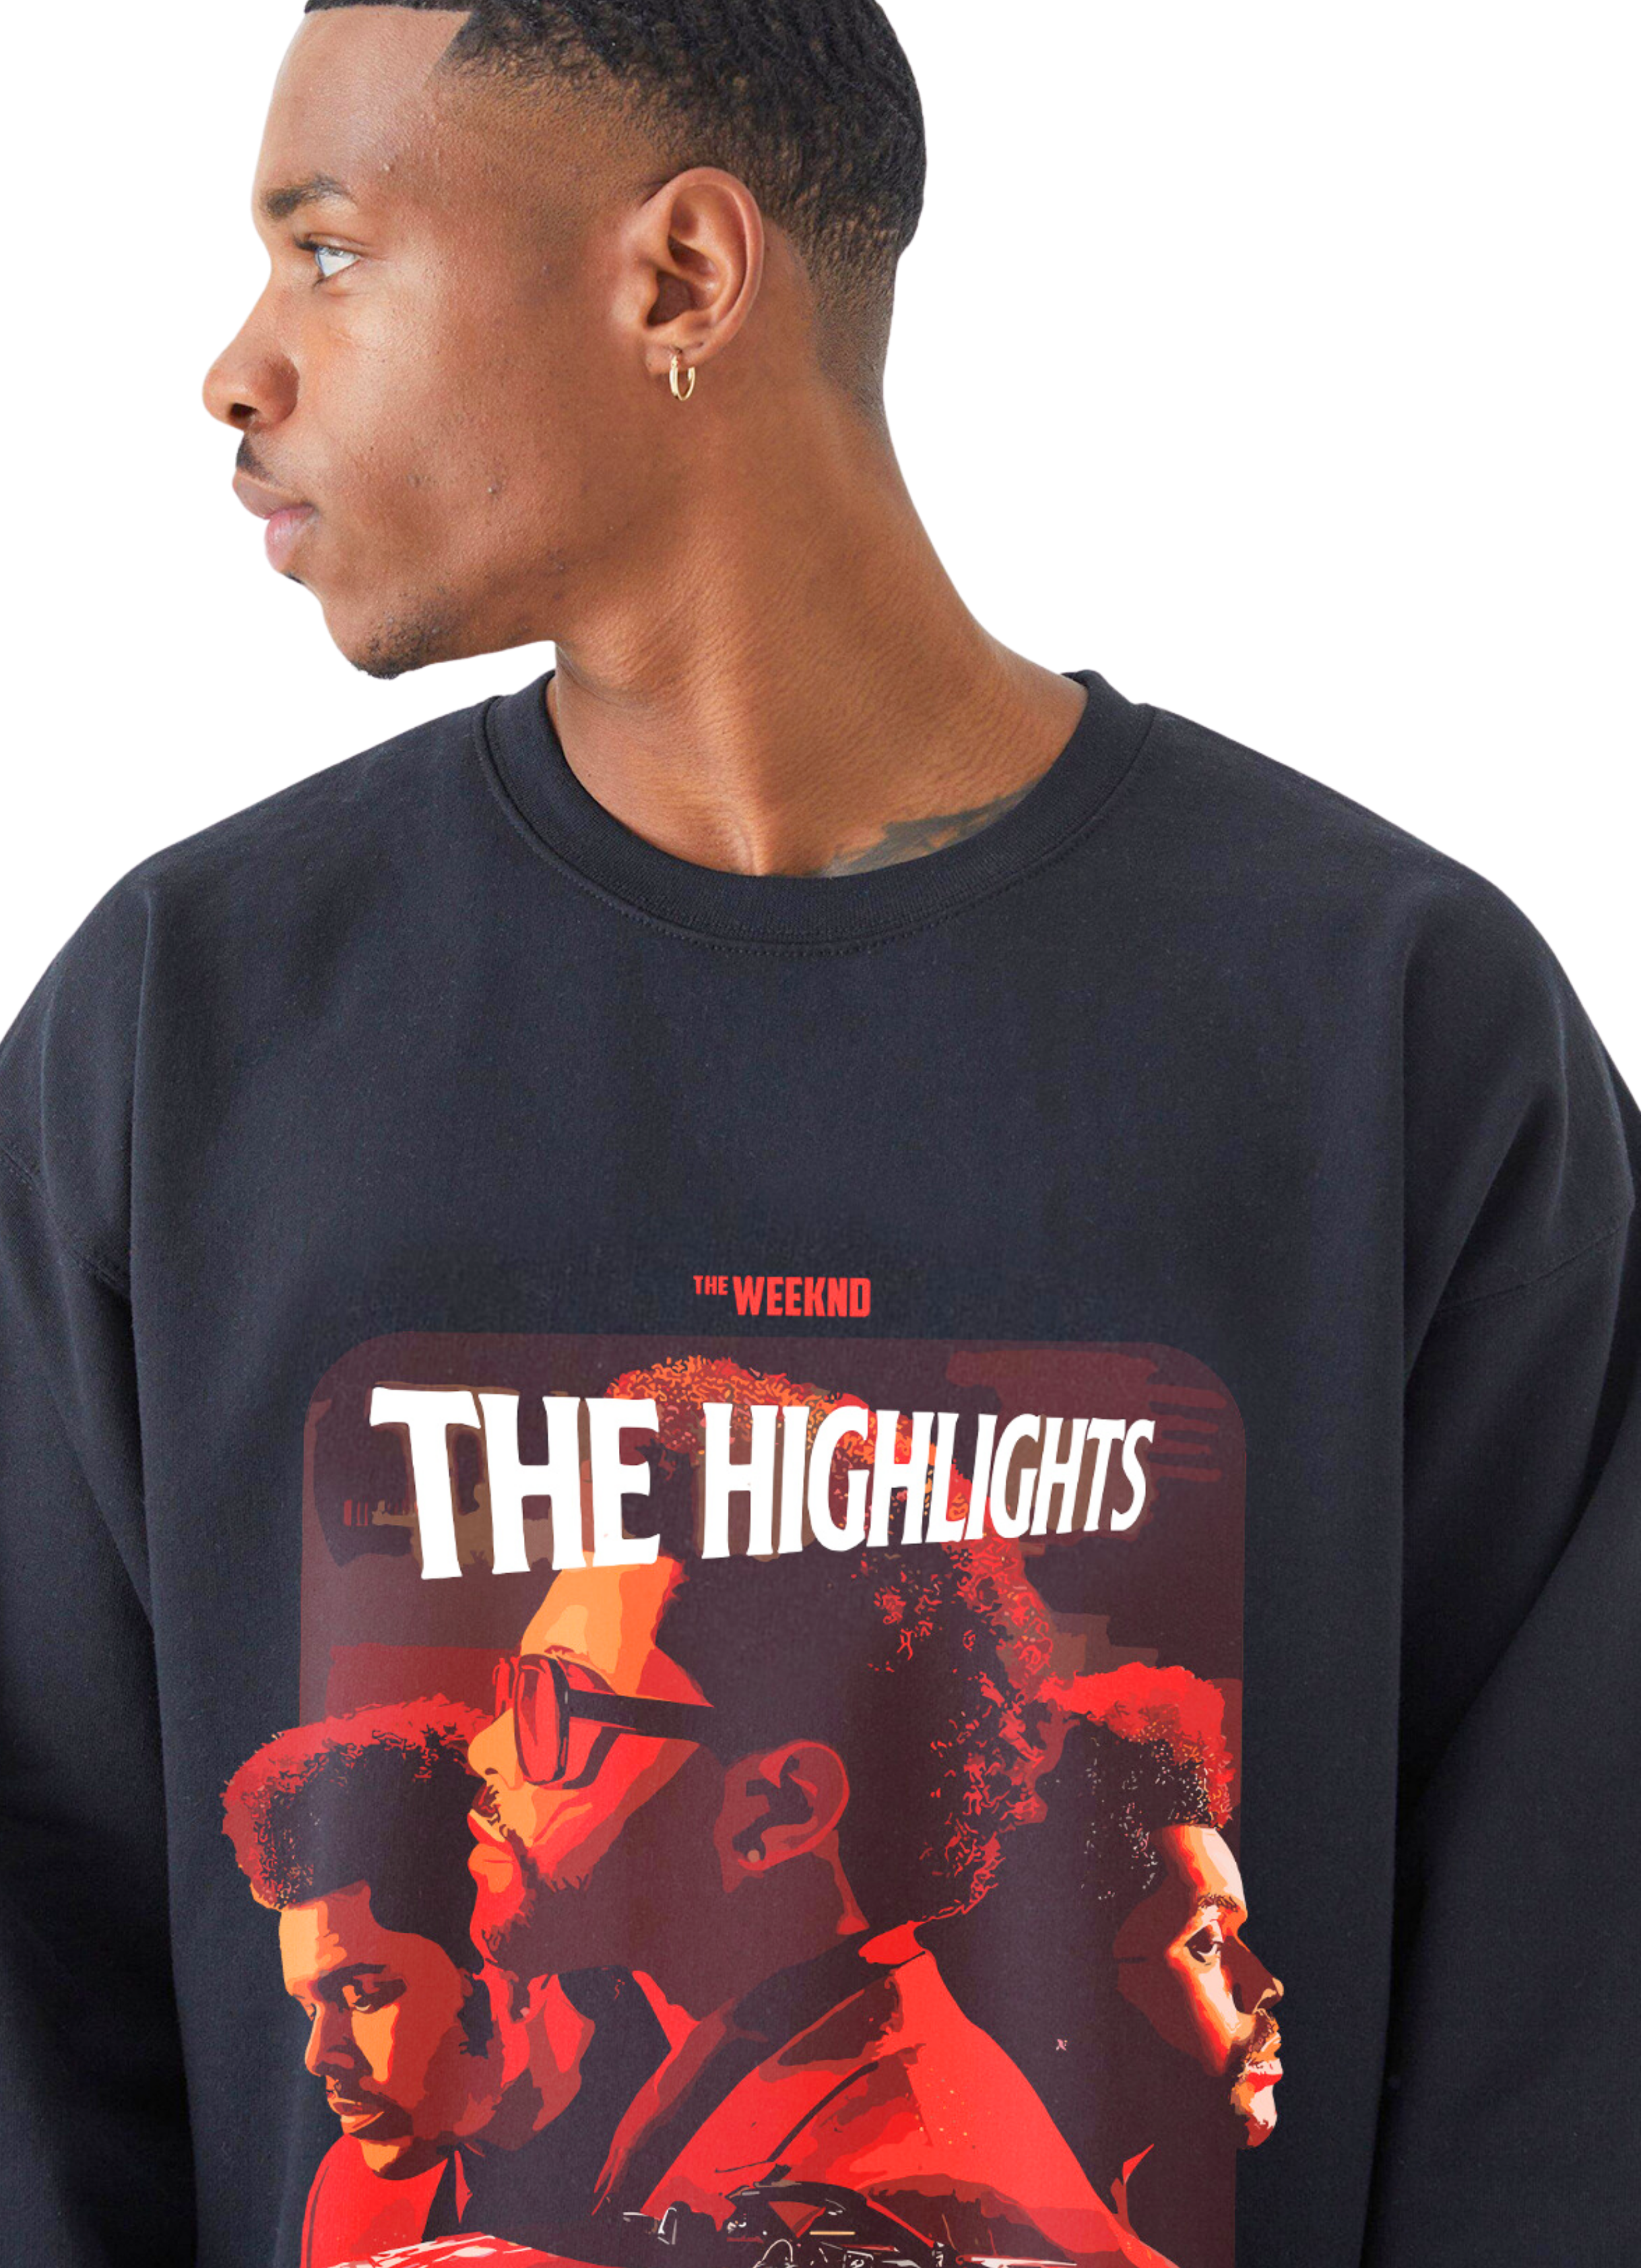 The Weeknd The Highlights Unisex Sweatshirt